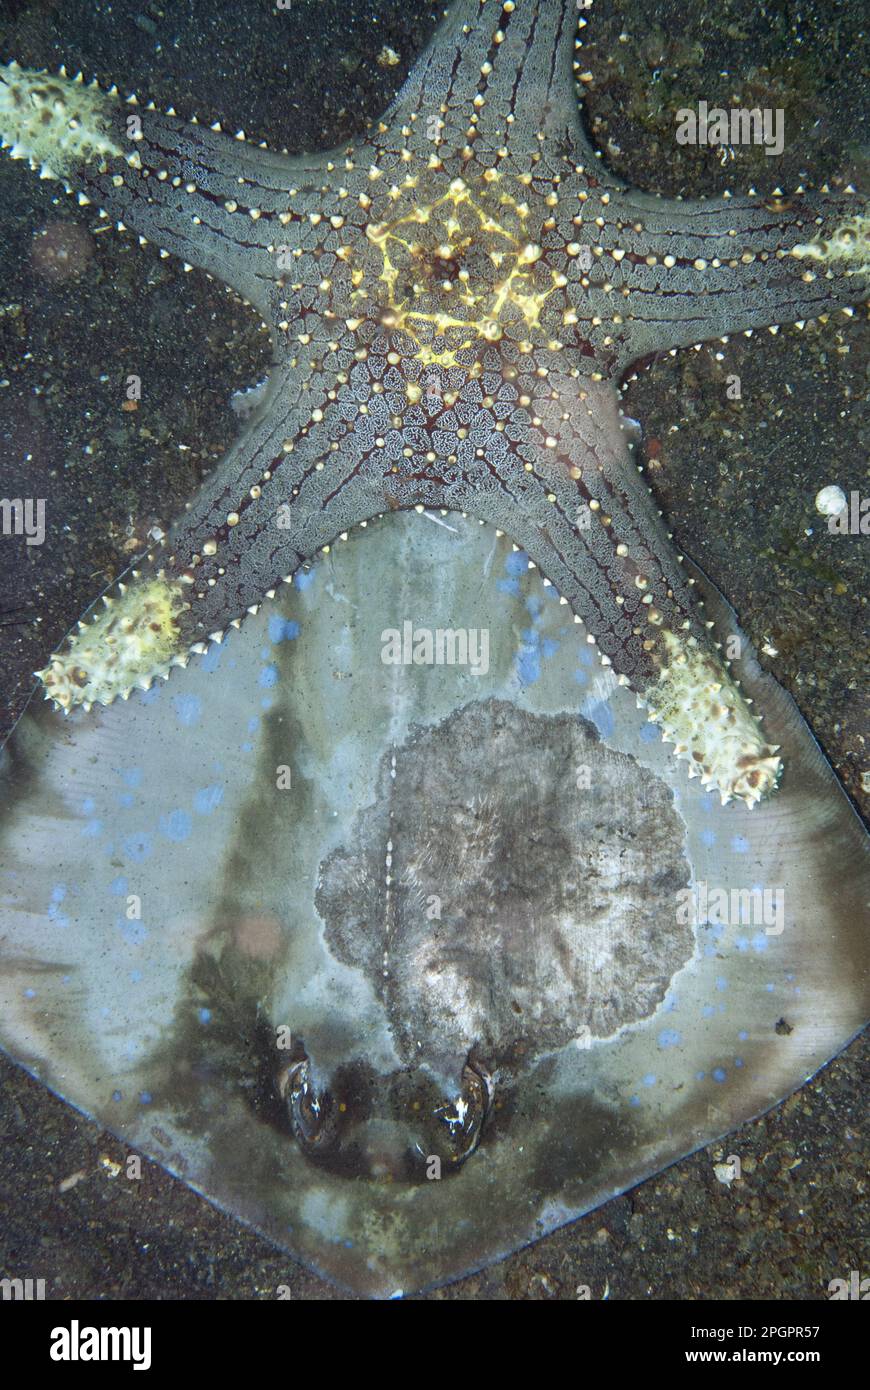 Honeycomb starfish (Pentaceraster alveolatus) adult, feeding, on corpse of bluespotted ribbontail ray (Taeniura lymma), on black sand at night Stock Photo